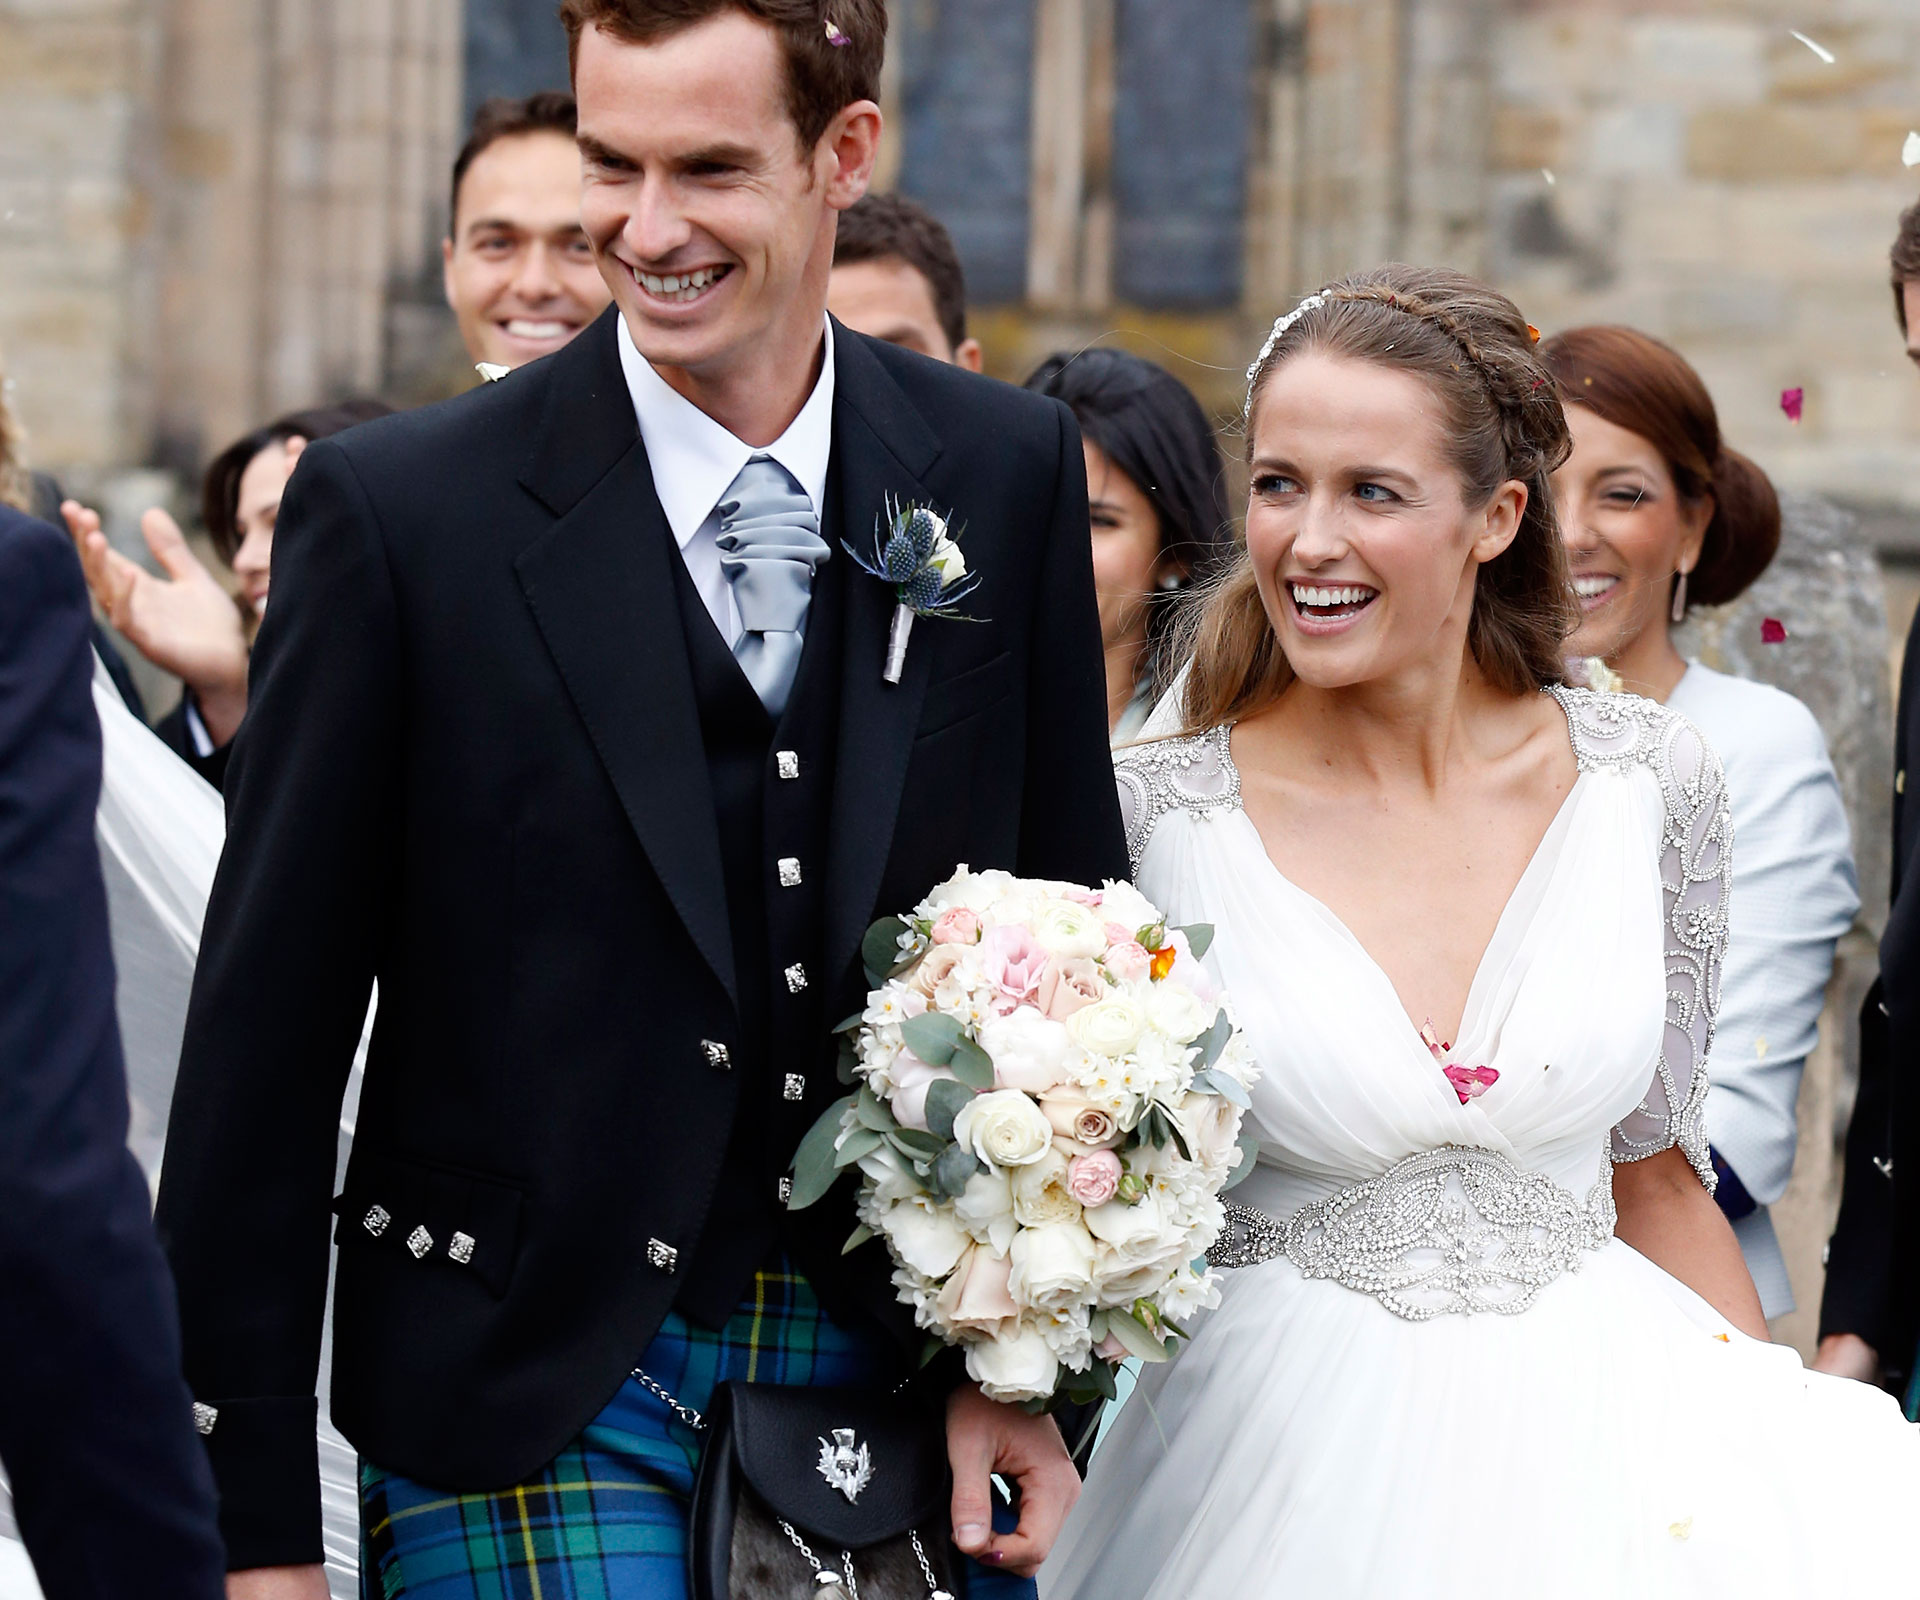 Tennis star Andy Murray marries Kim Sears!